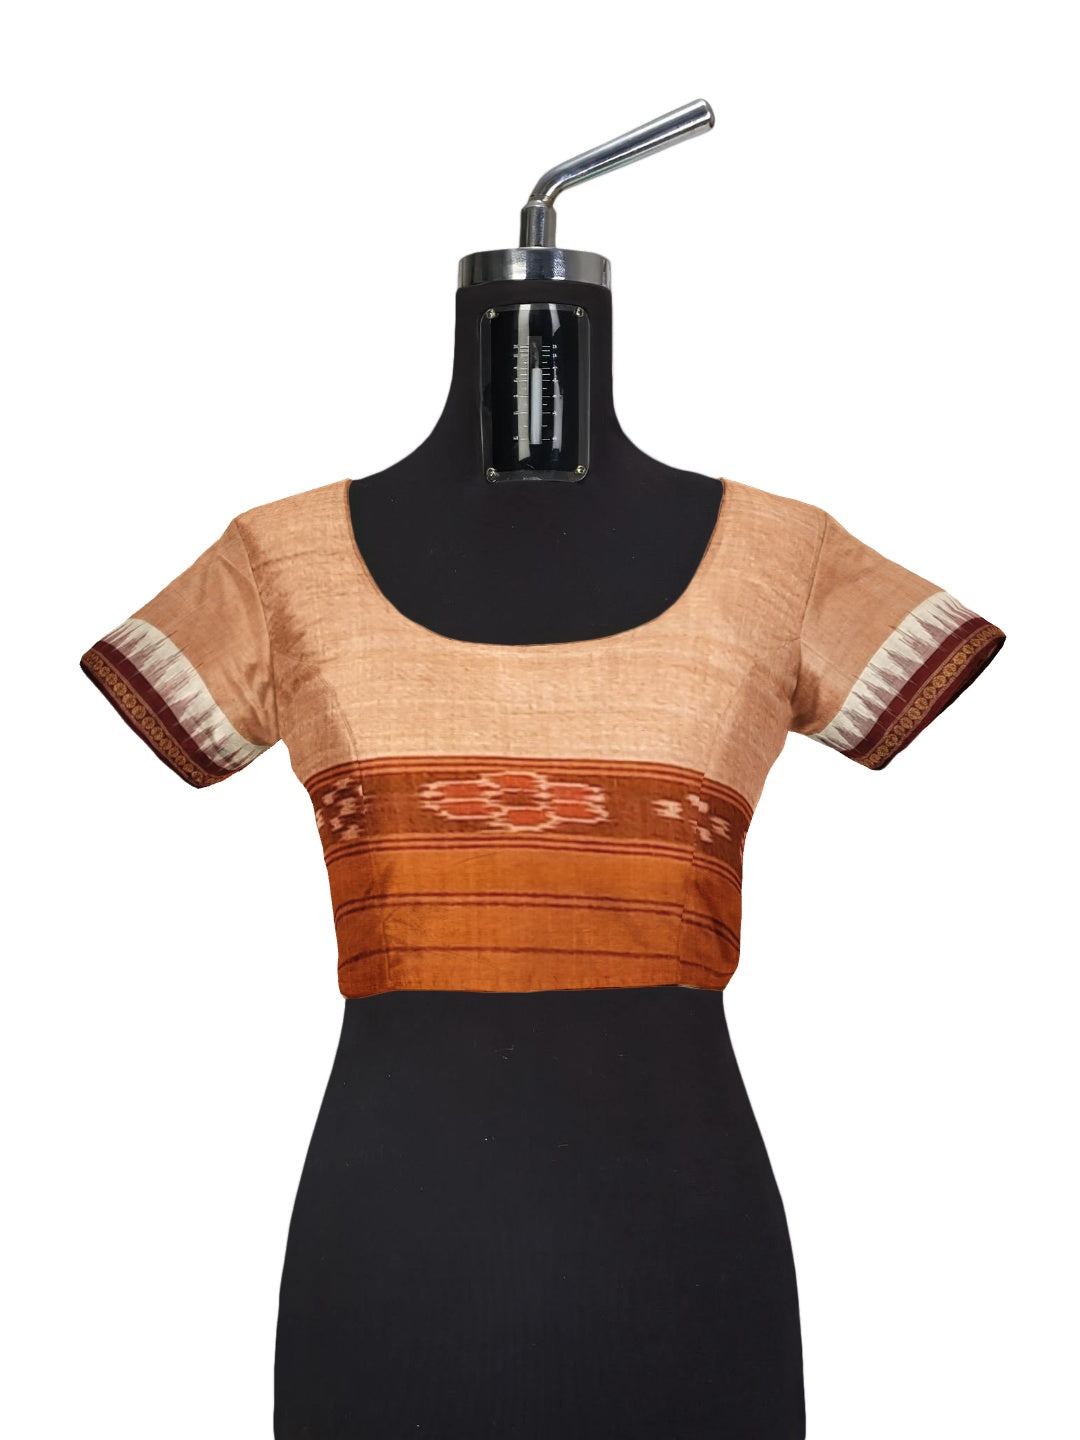 Peach and Maroon Cotton Odisha Ikat saree  with mix match cotton ikat blouse